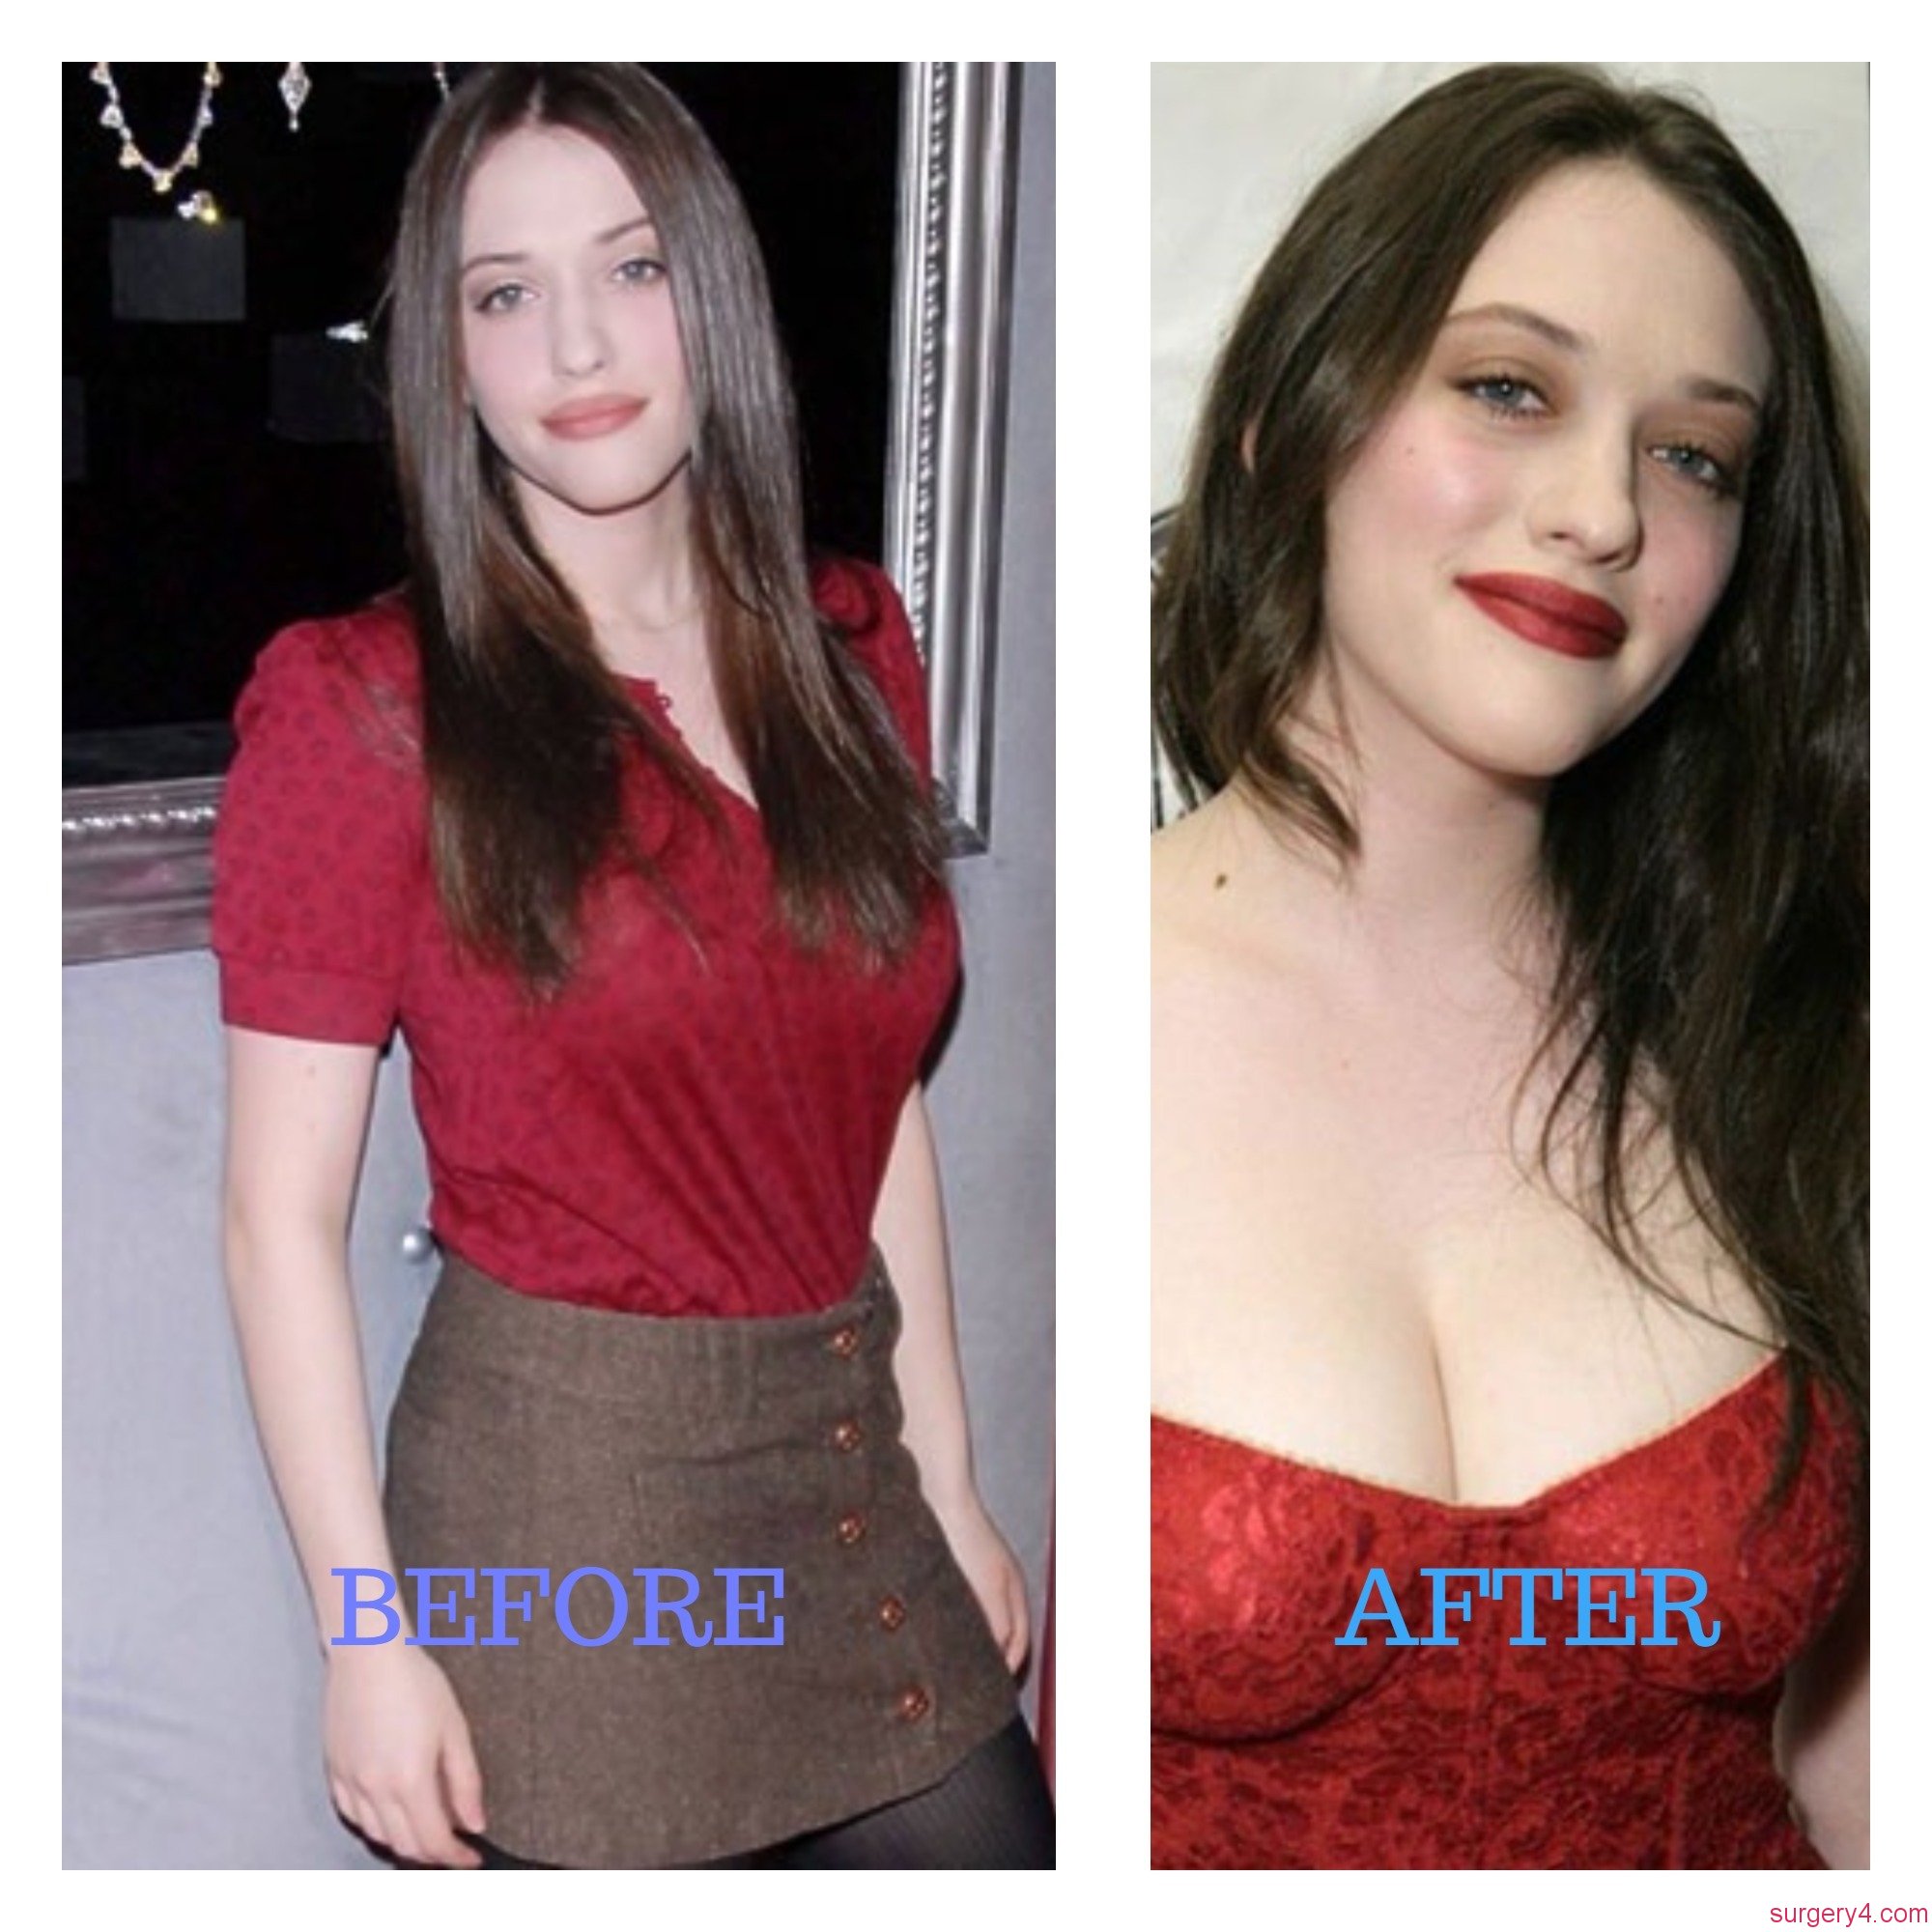 Kat Dennings Plastic Surgery Photos [Before & After] - Surgery4.